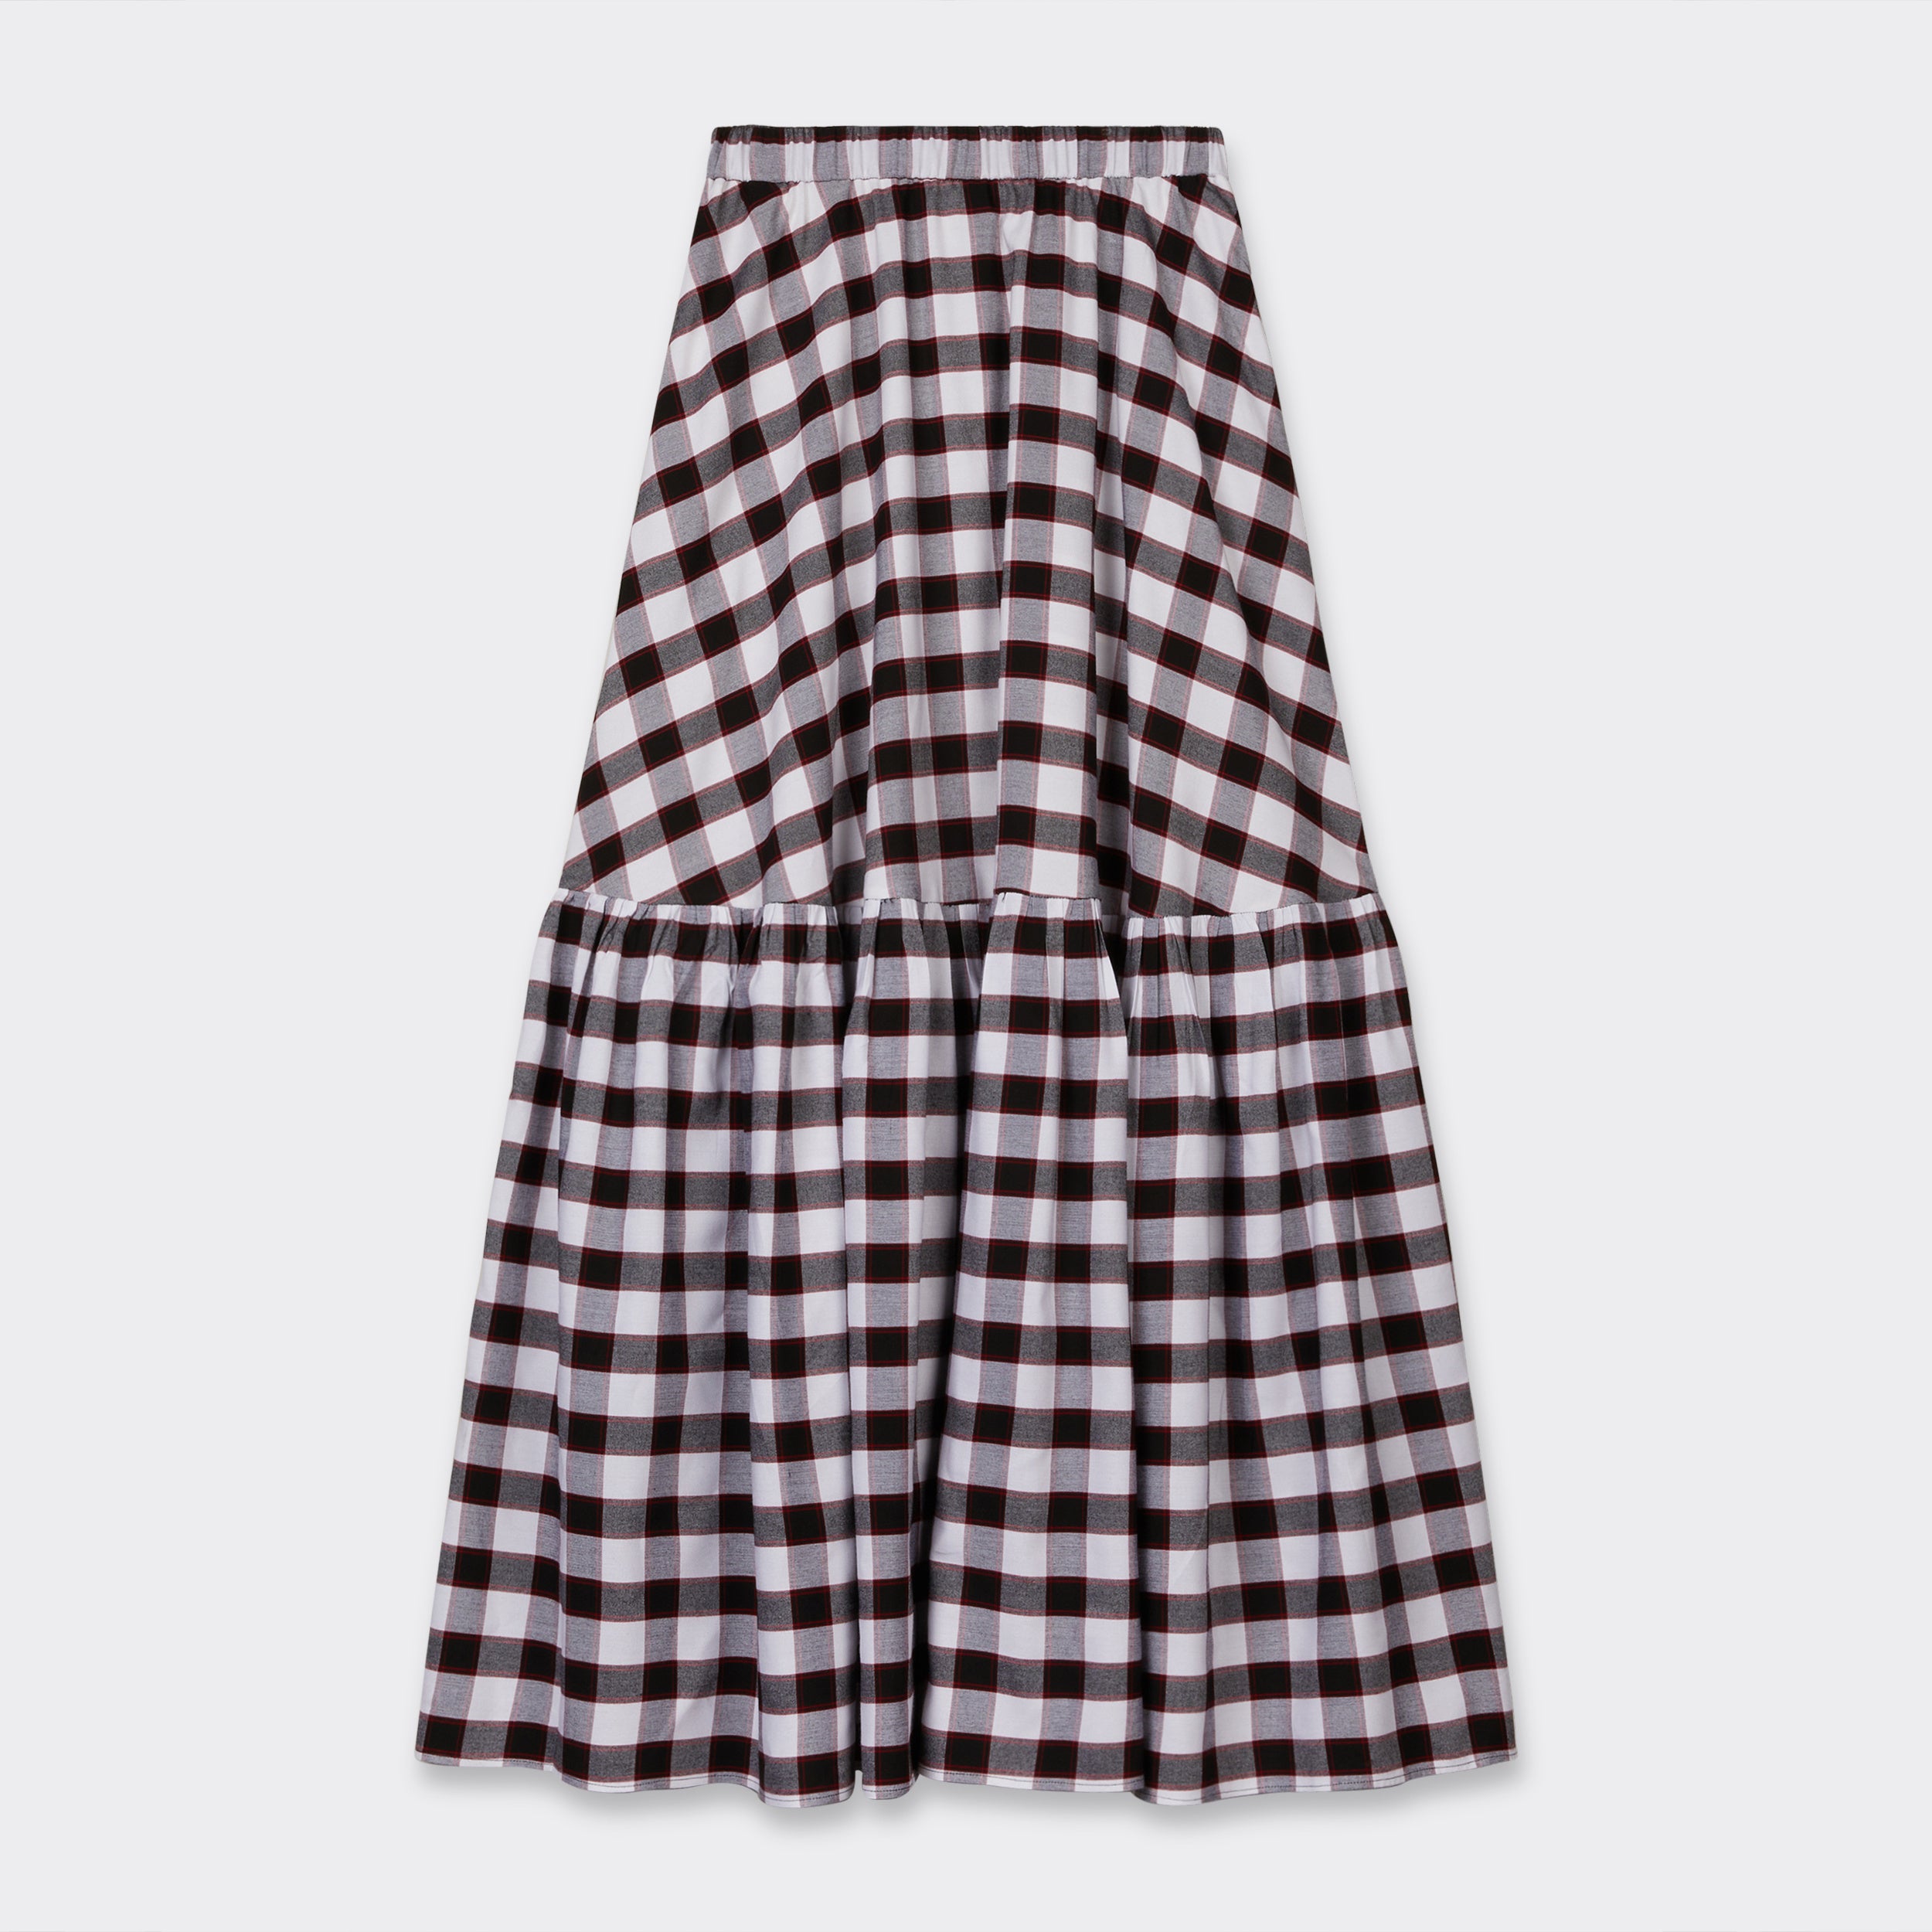 White maxi skirt in Maasai fabric with black checks 